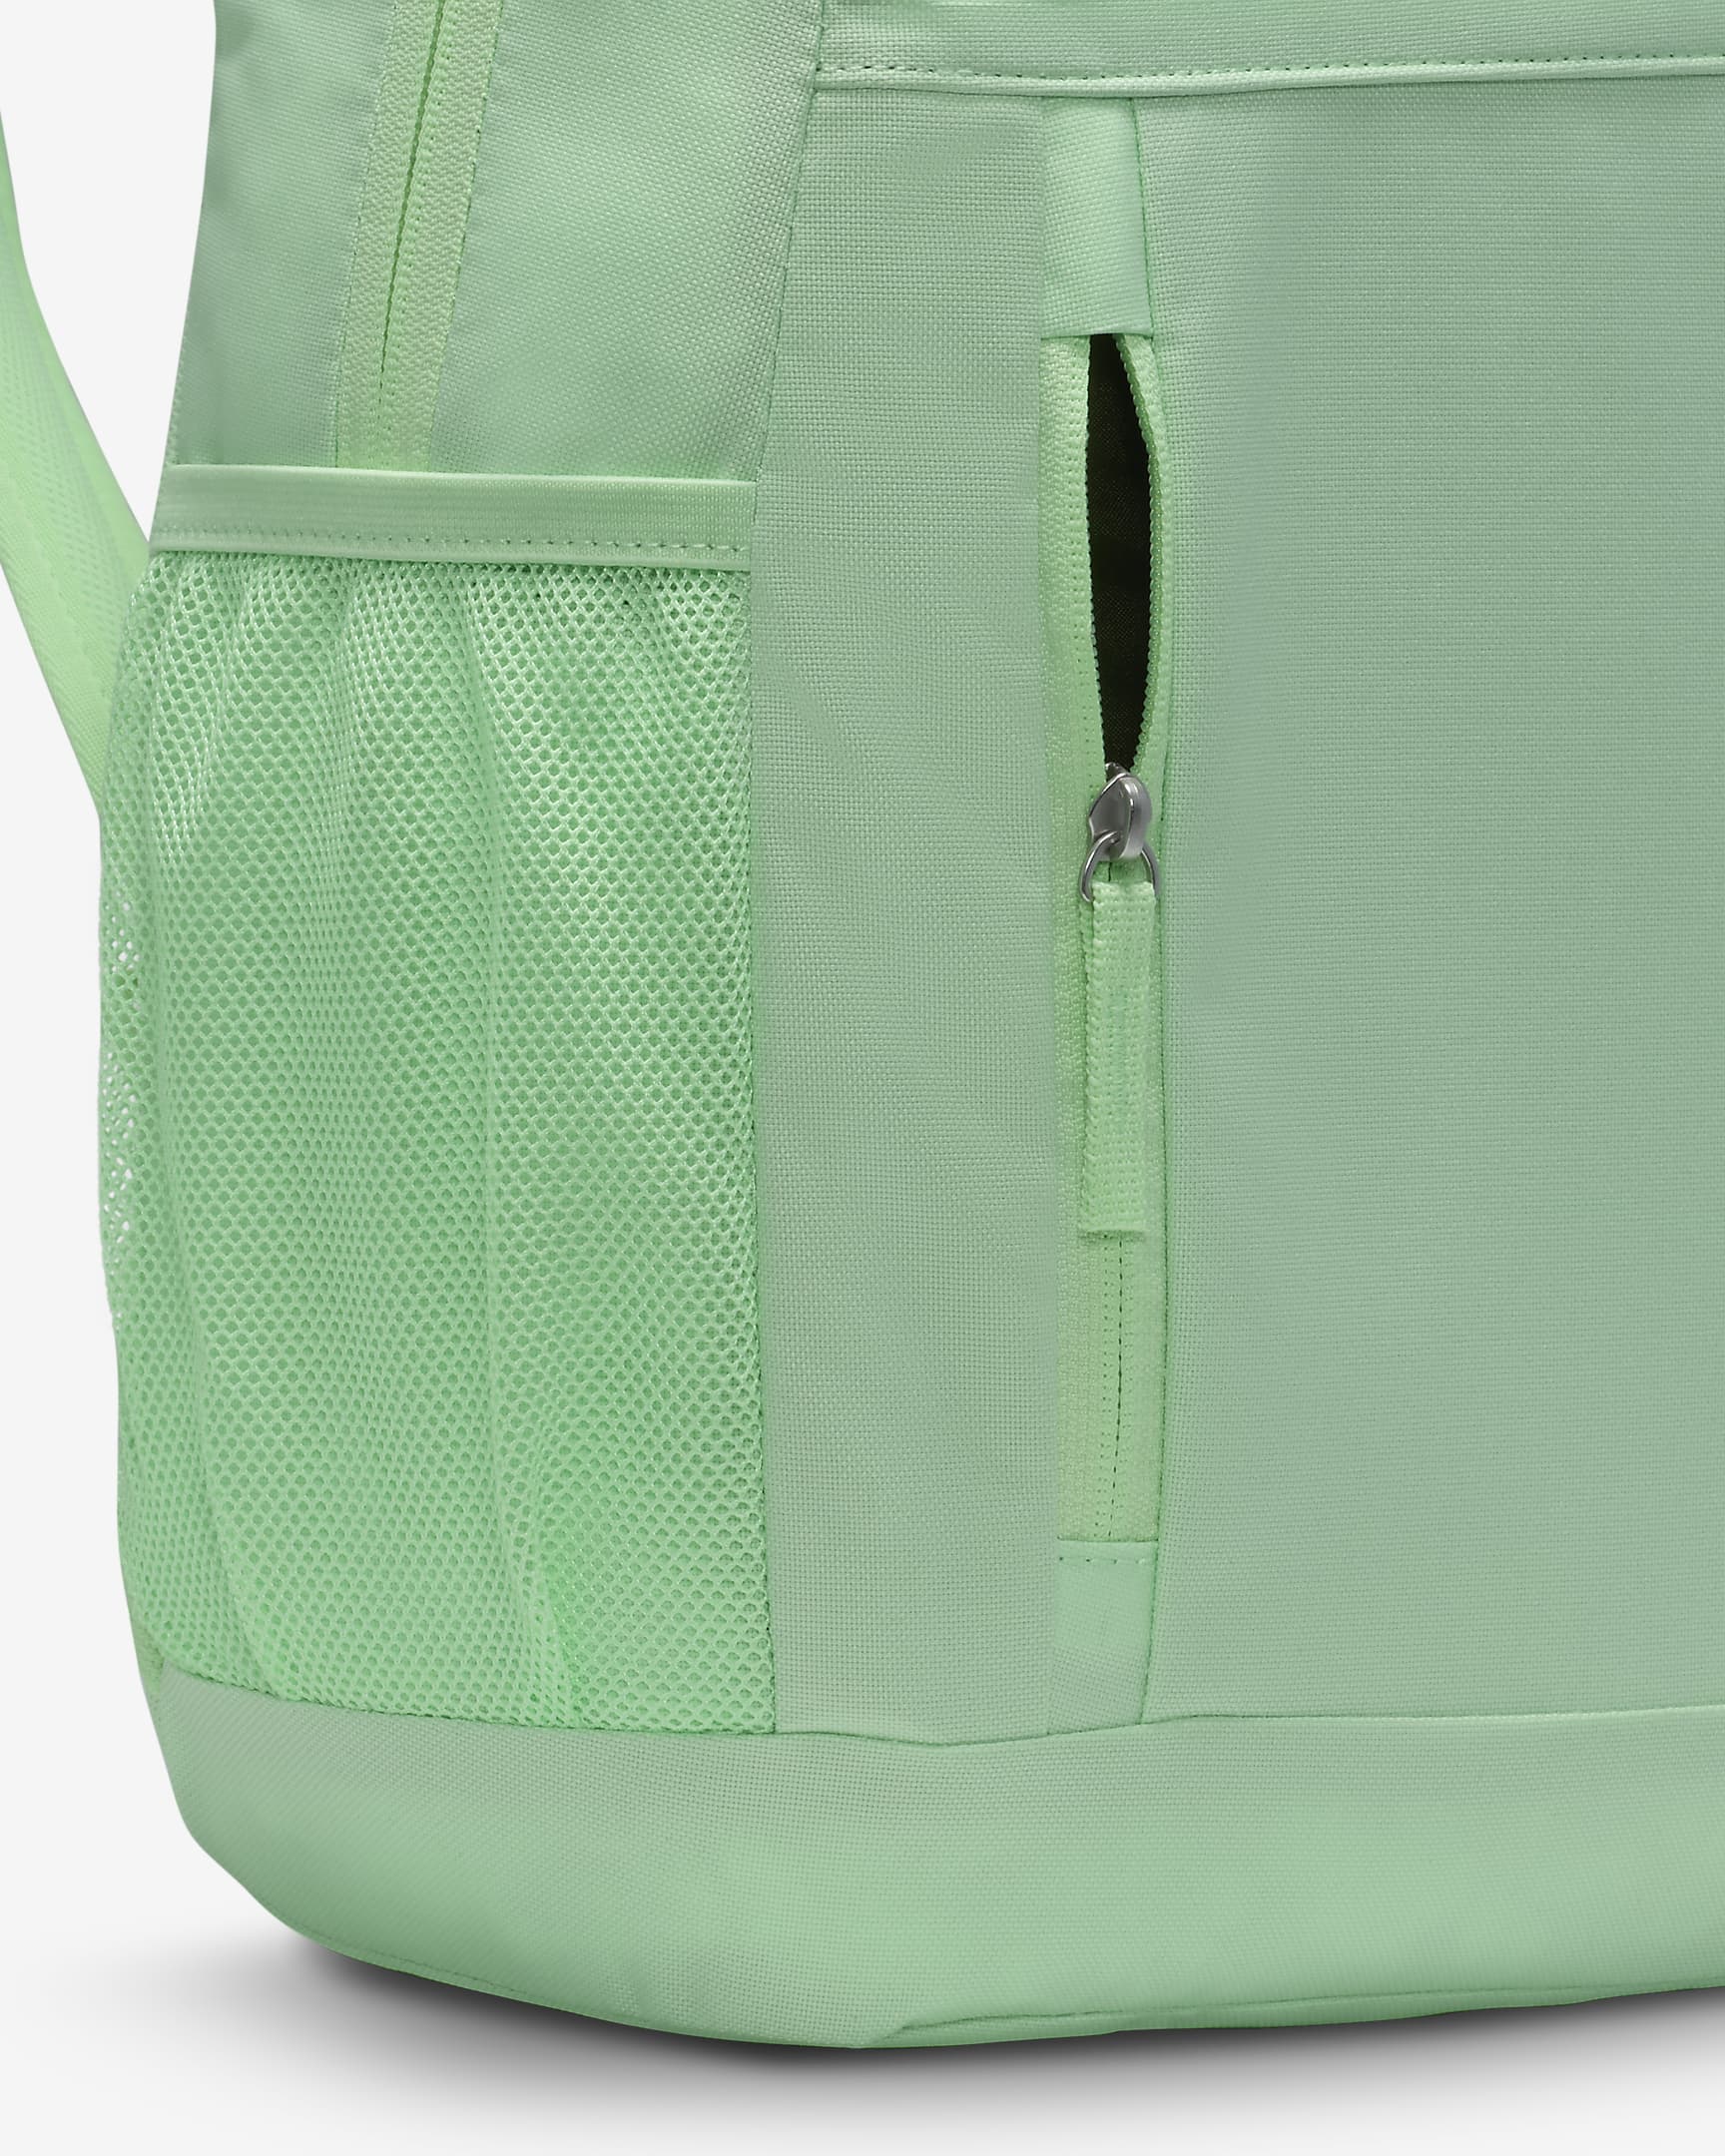 Sac à dos Nike pour enfant (20 L) - Vapor Green/Vapor Green/Cargo Khaki